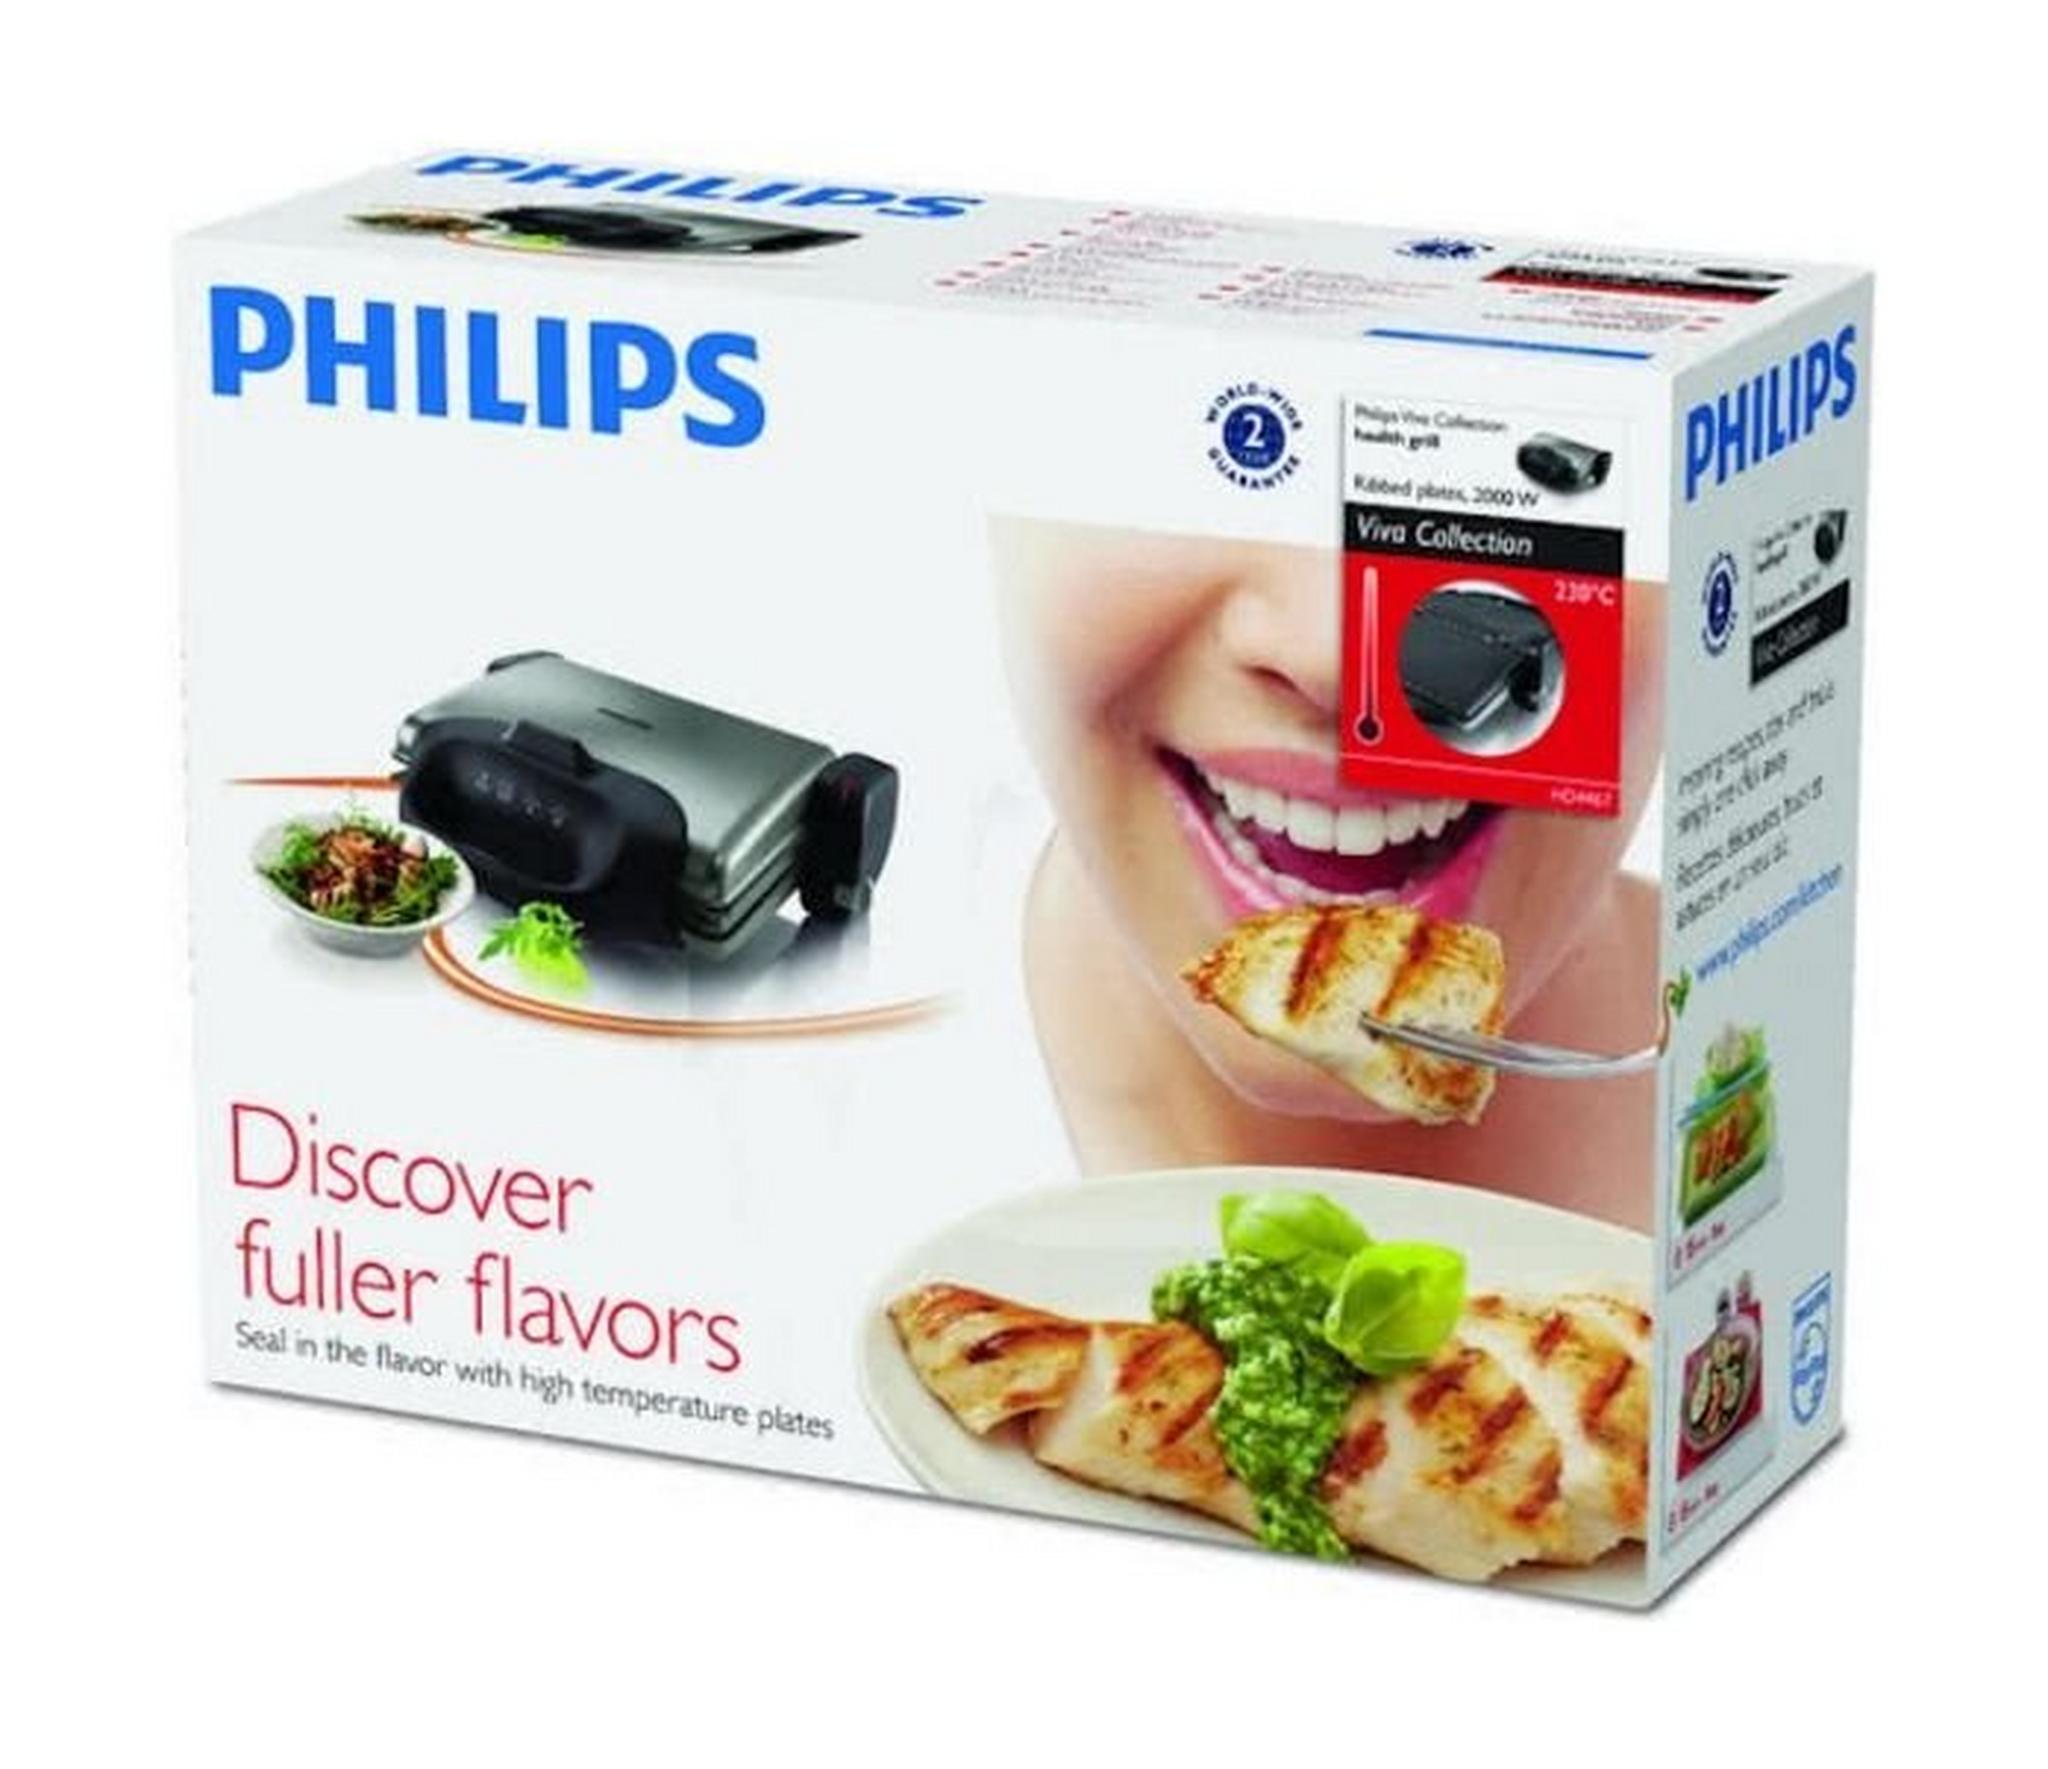 Philips 2000 W Health Grill (HD4467/91) – Black / Silver